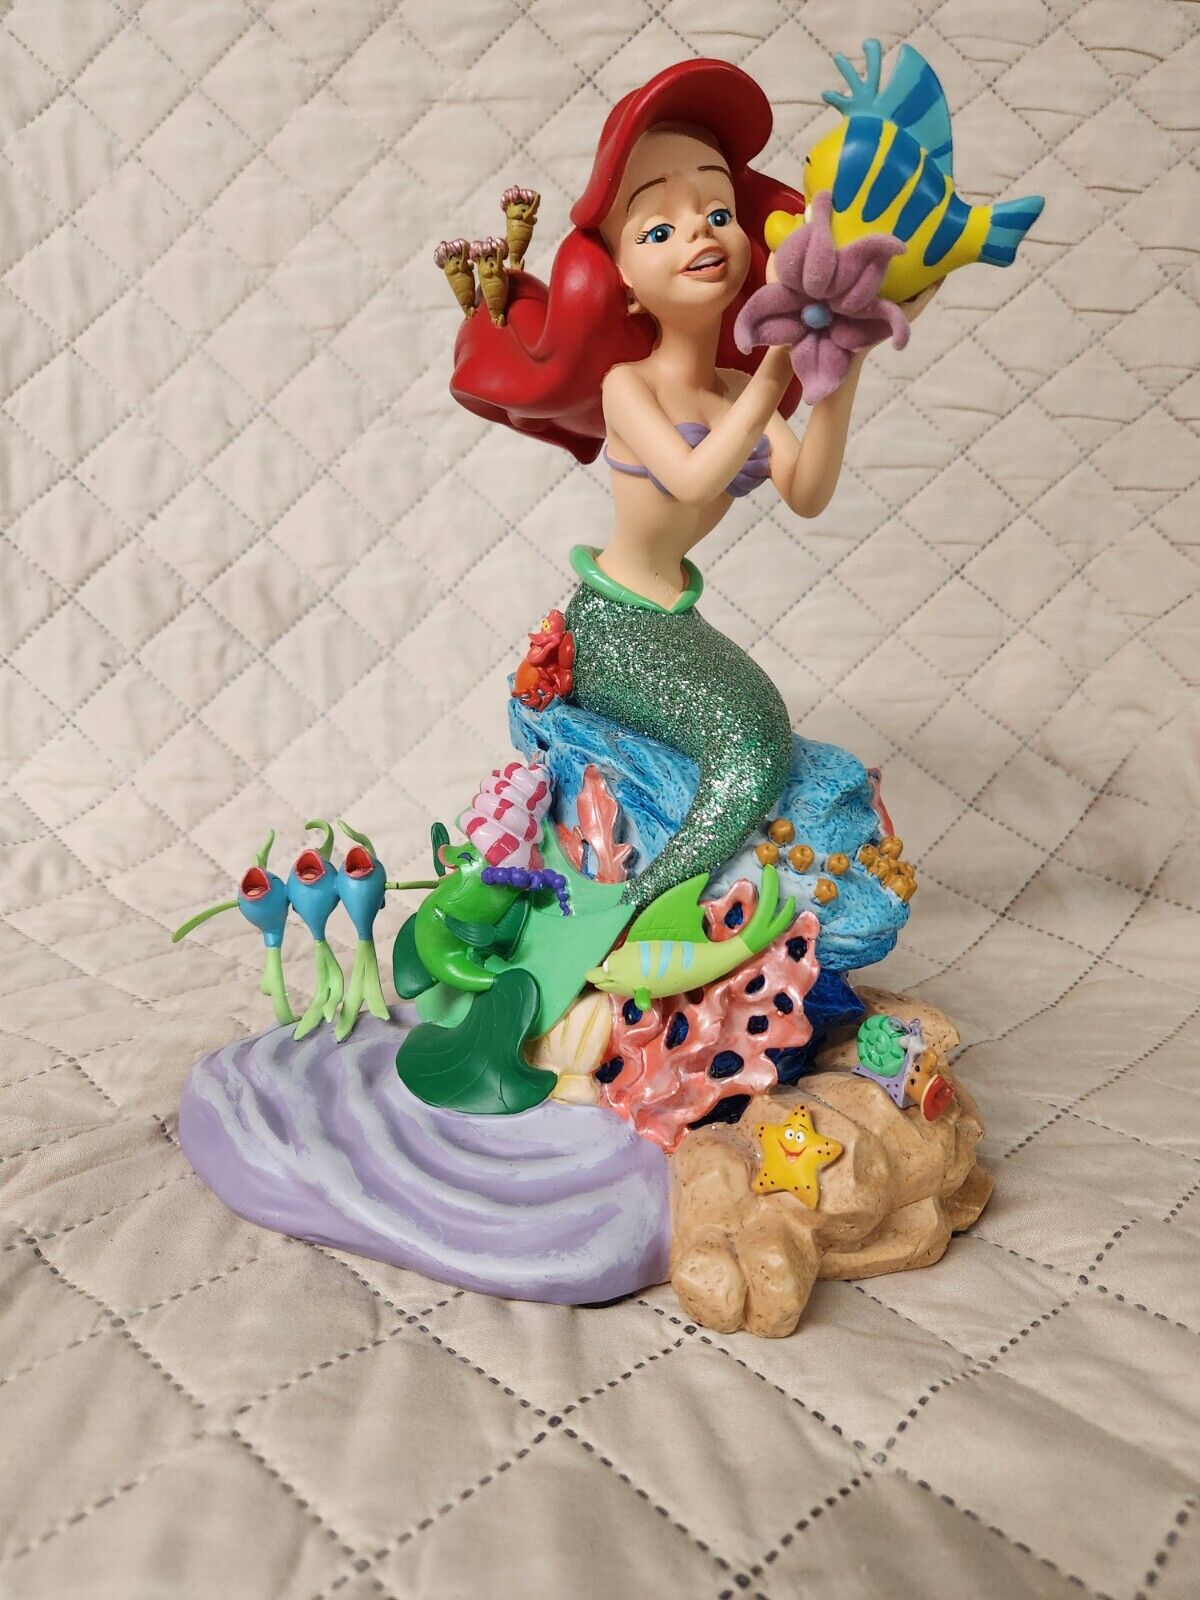 Disney Parks The Little Mermaid Ariel and Friends Medium Figurine 13 Inches Tall